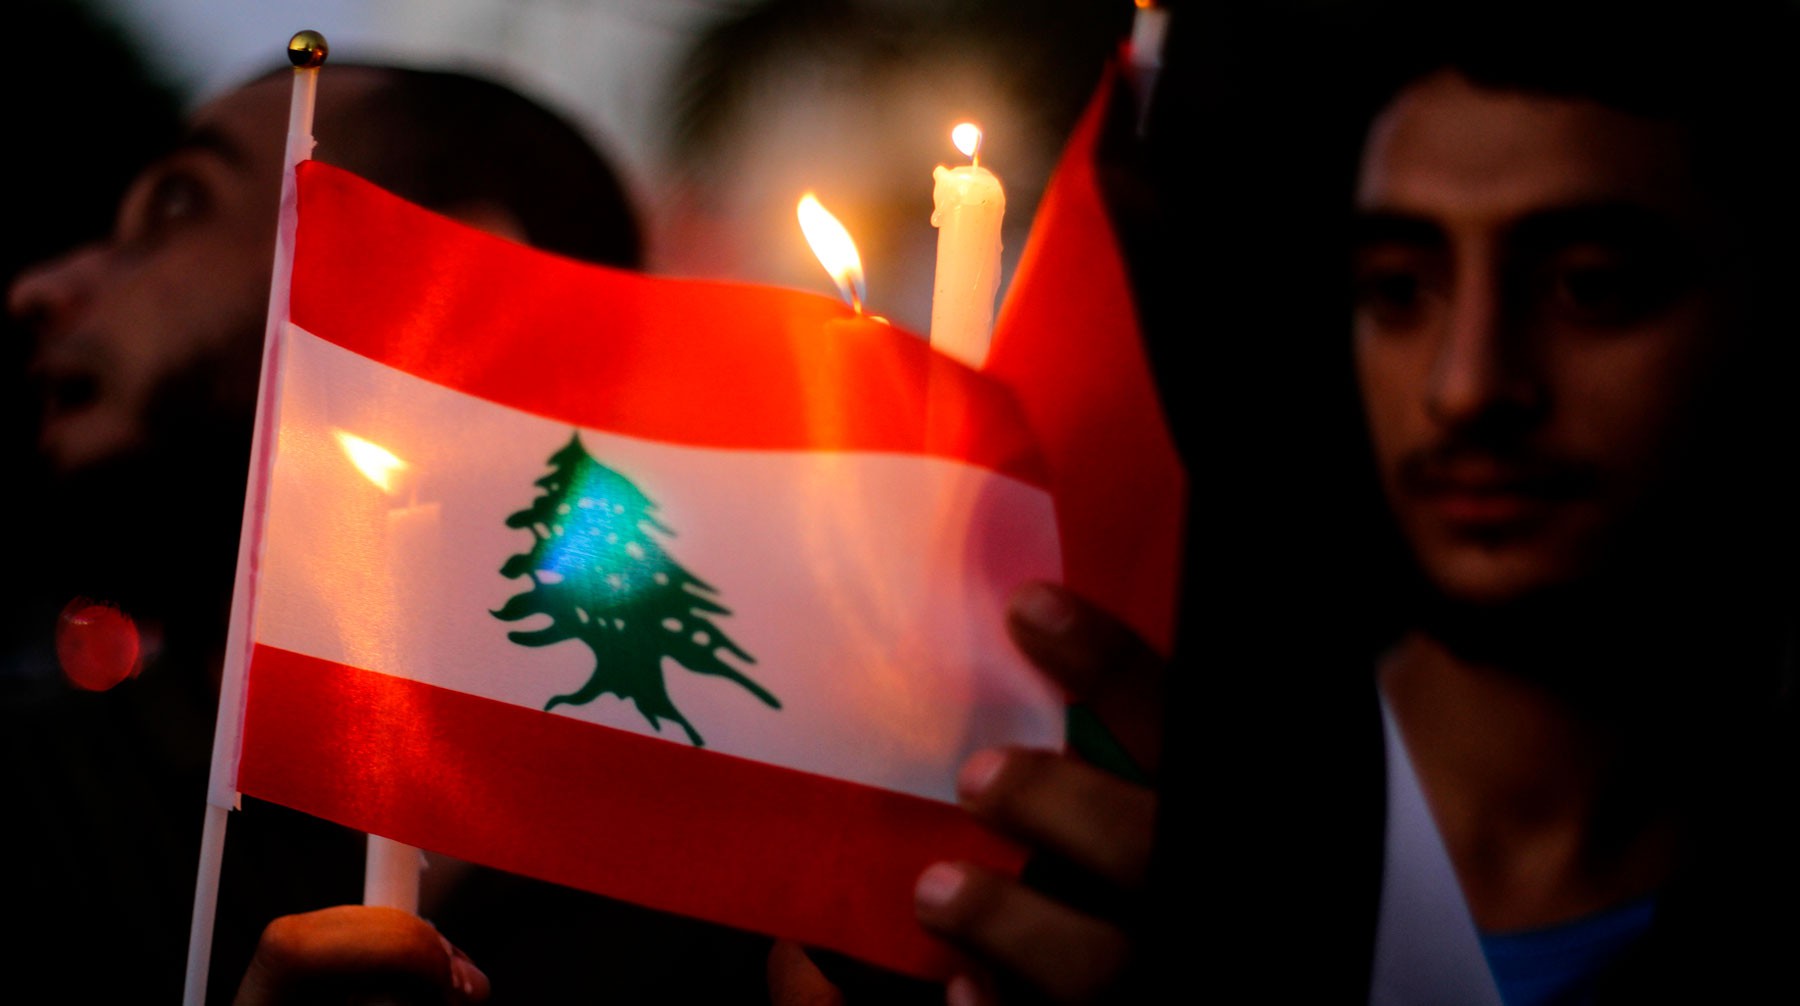 Dailystorm - Не знал, насколько это опасно: президента Ливана предупреждали о взрыве в Бейруте за две недели